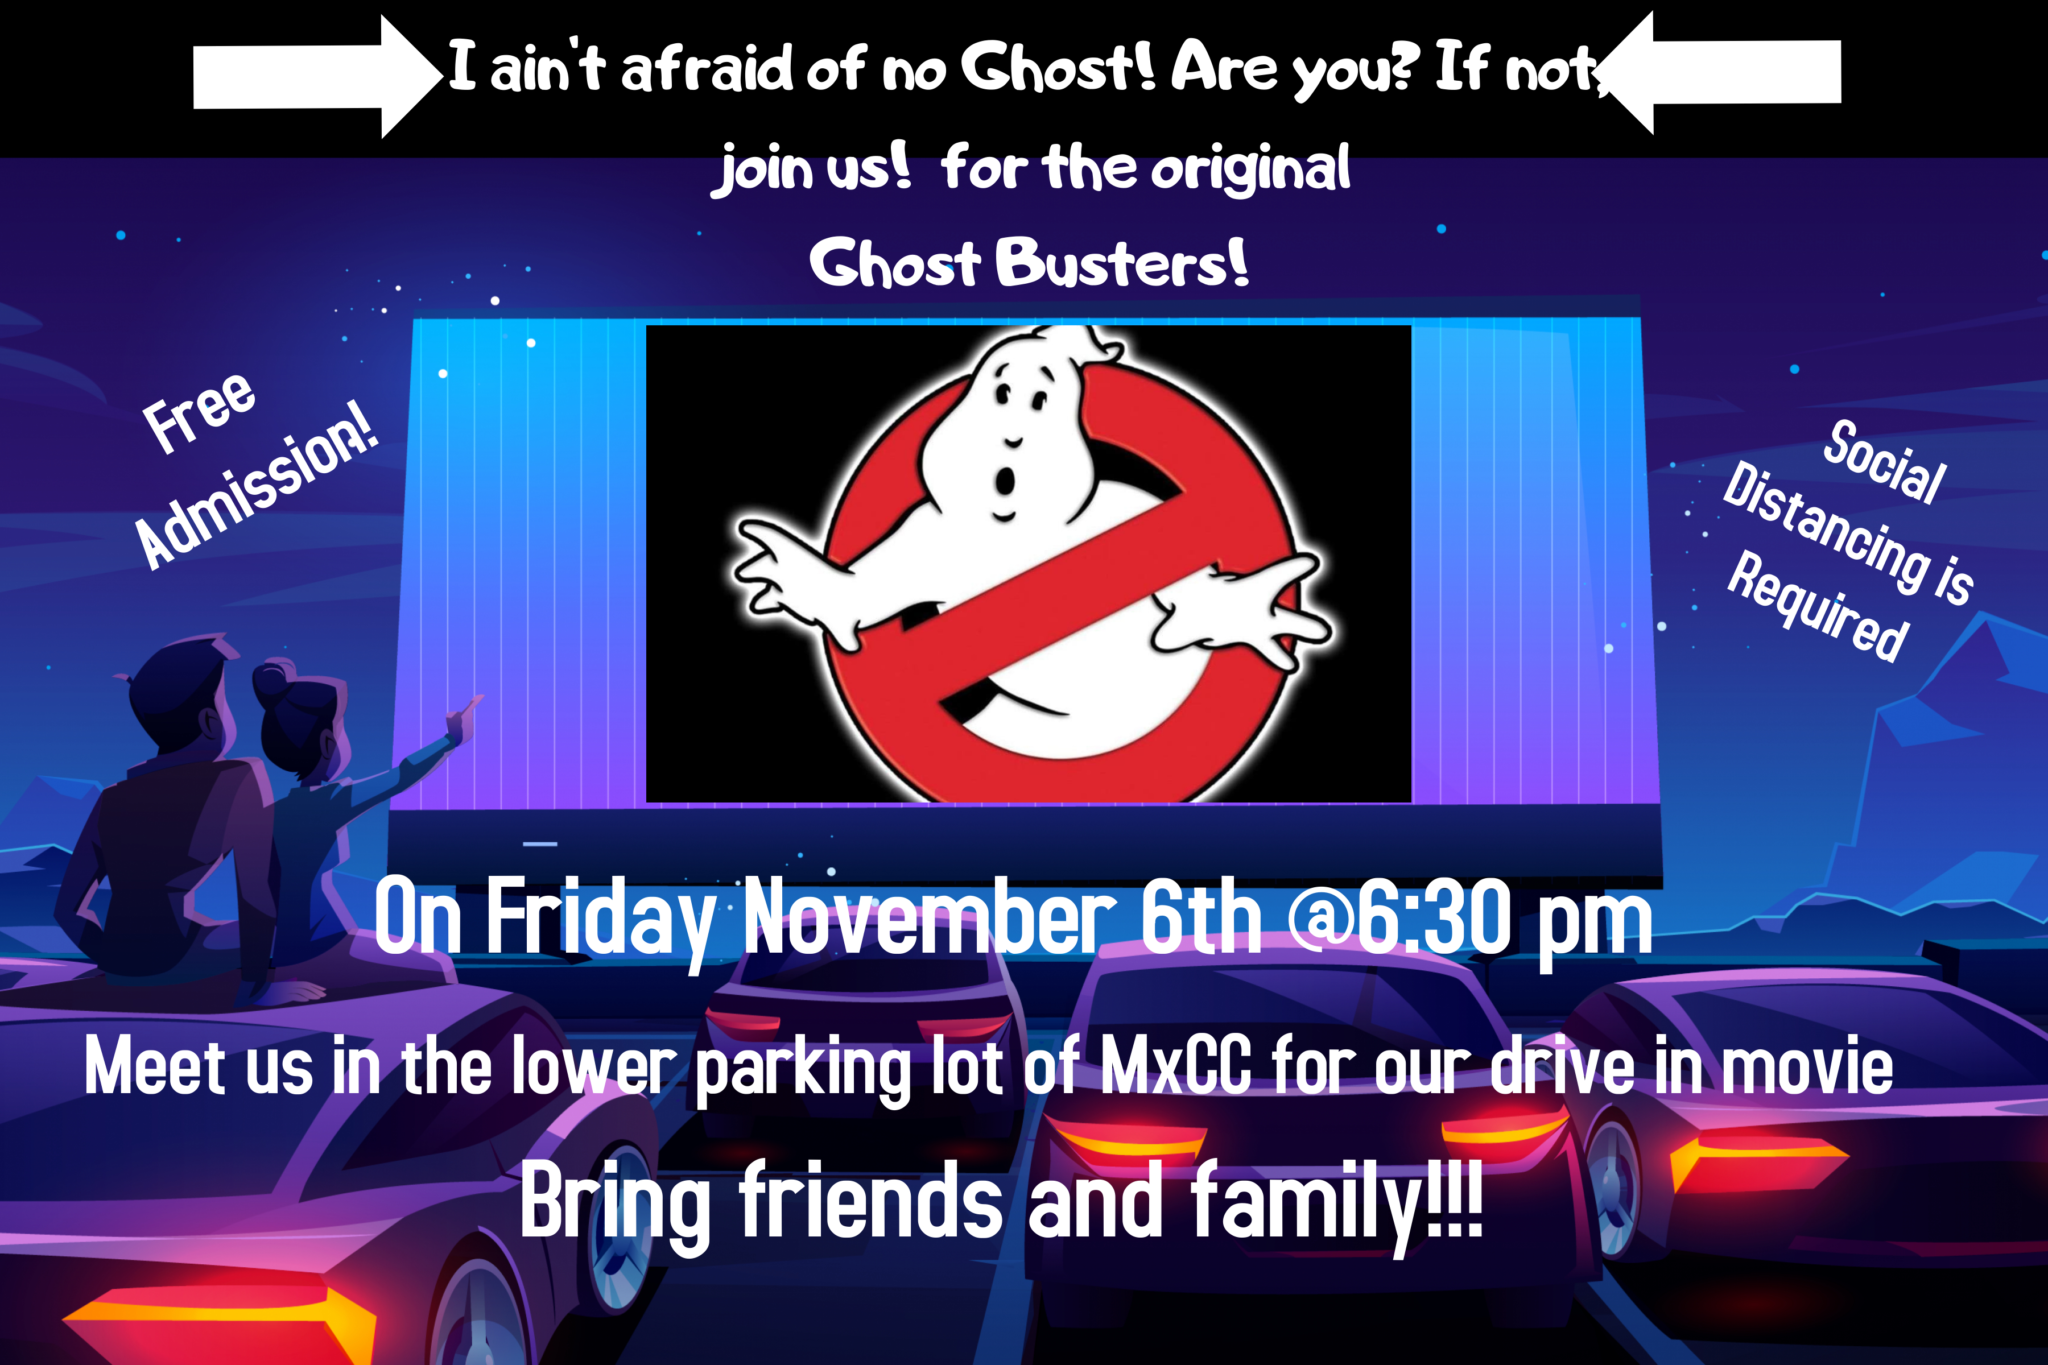 ghostbusters flyer. Details below